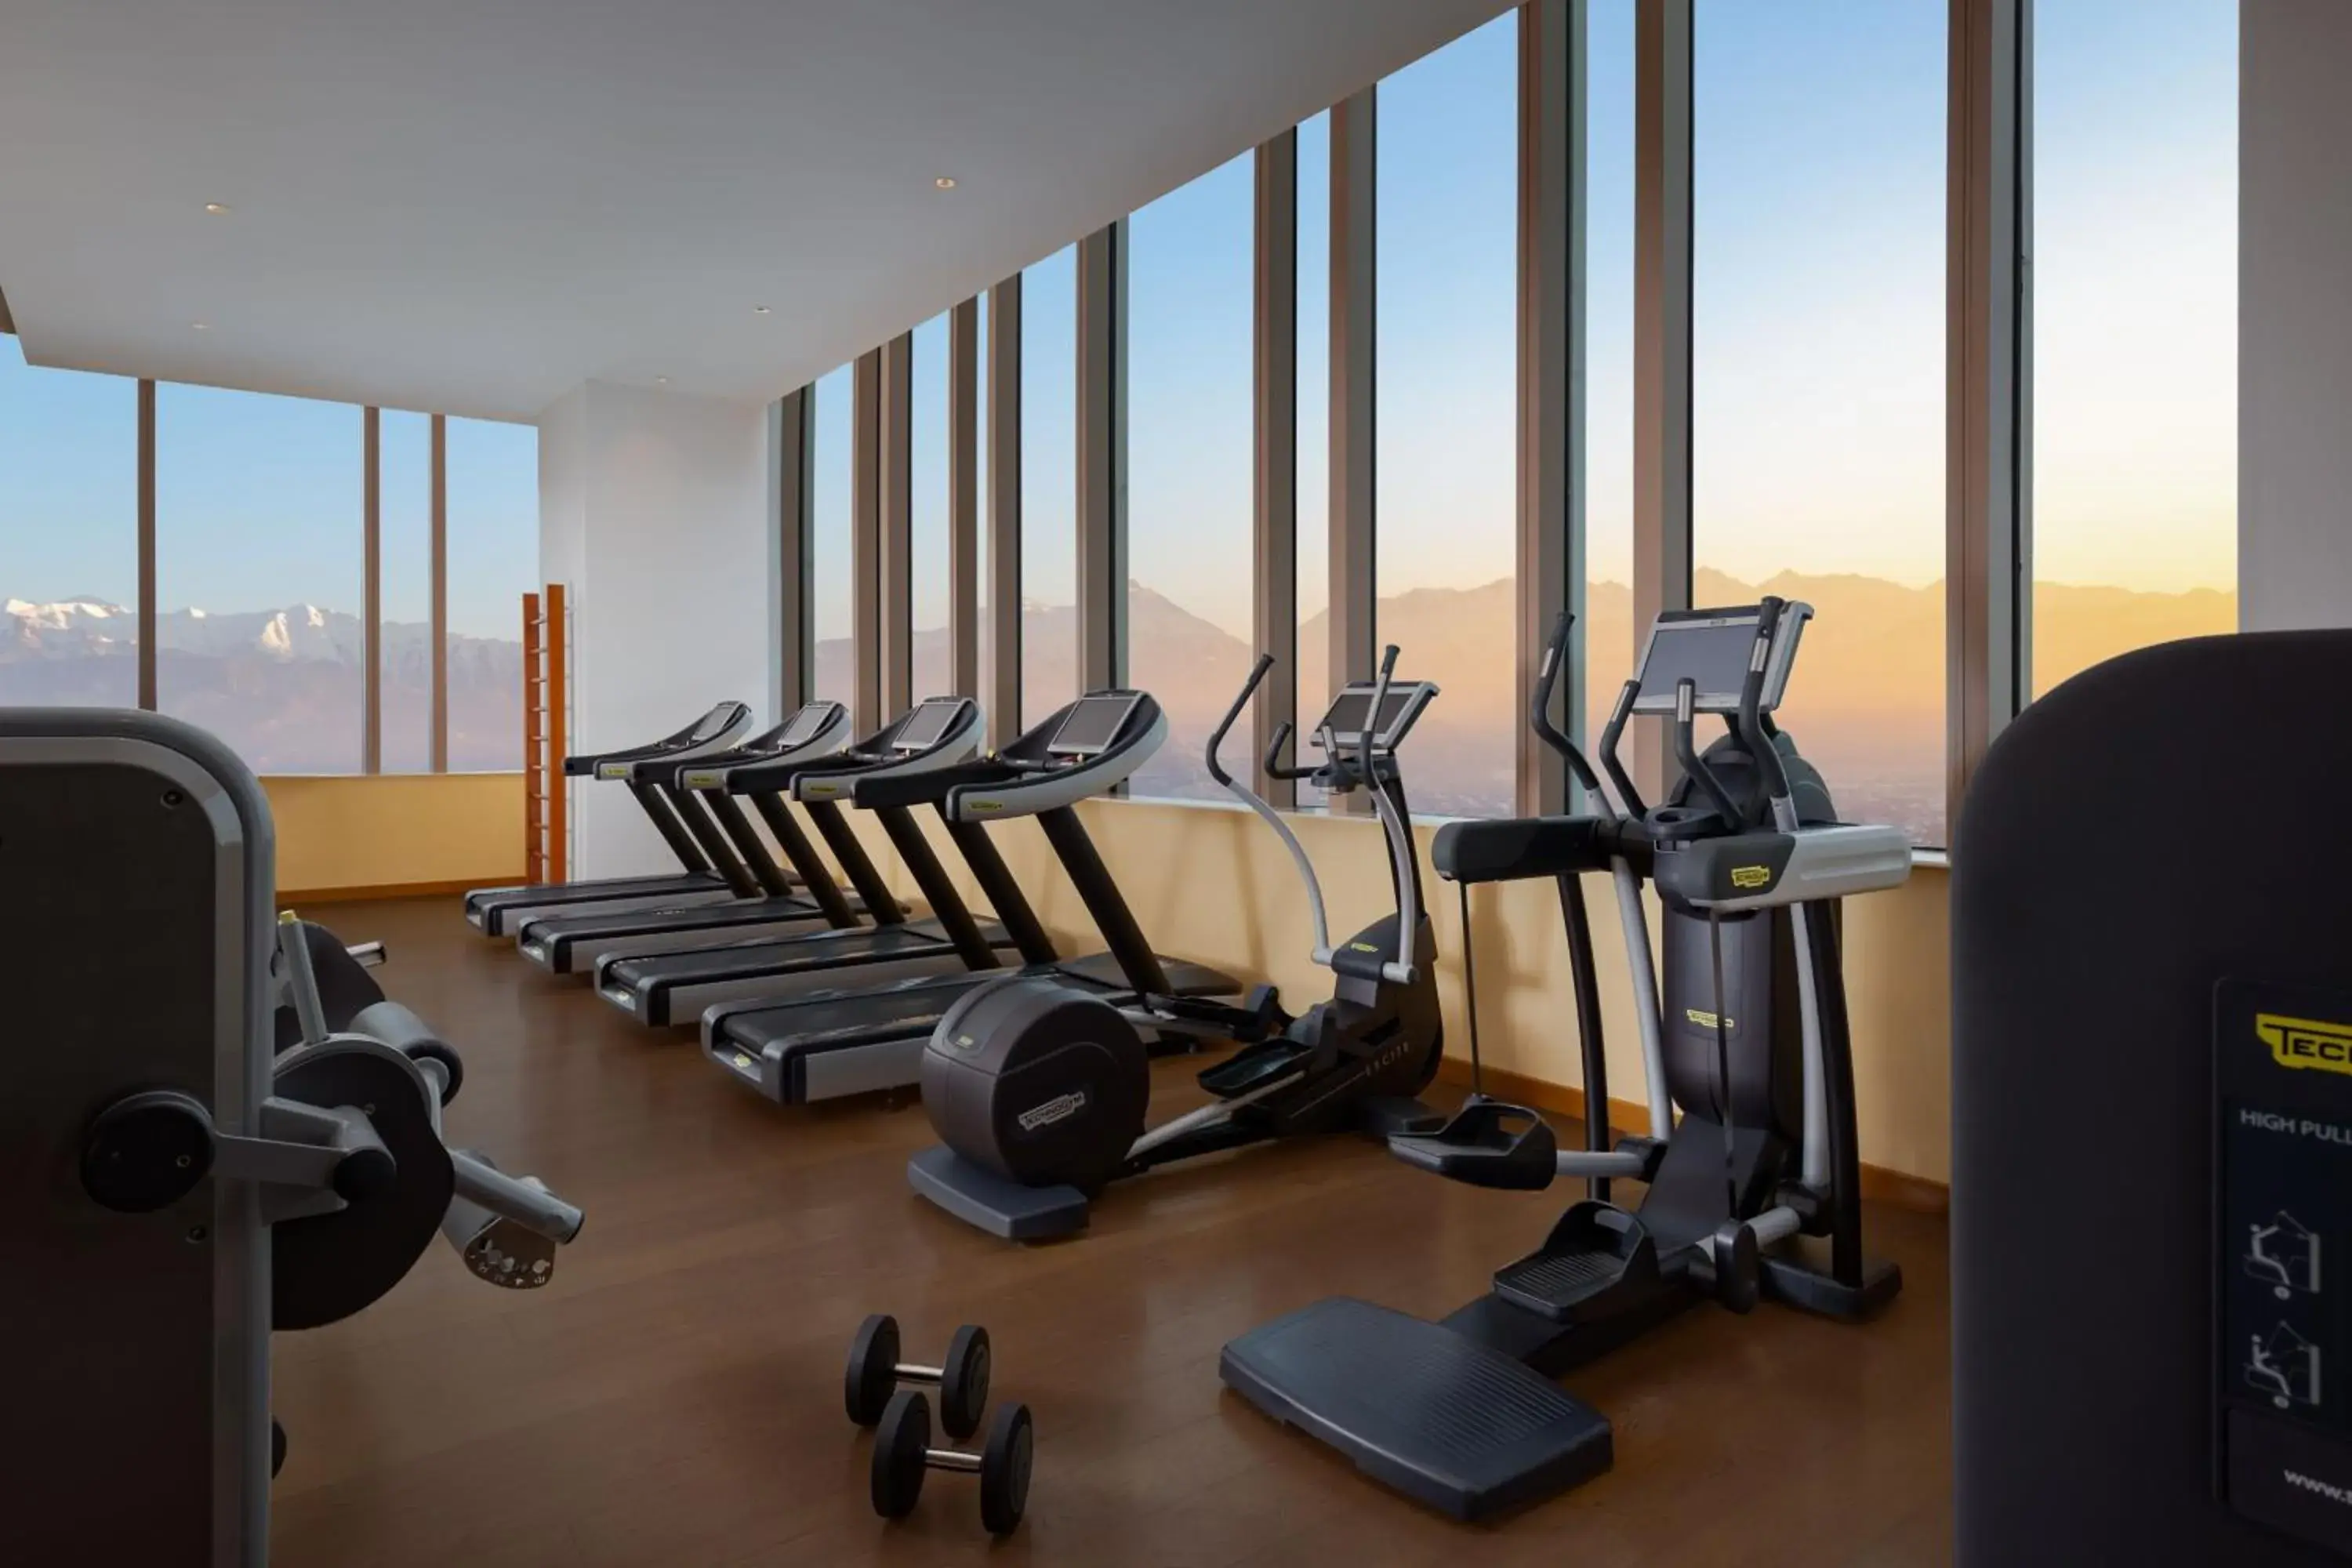 Fitness centre/facilities, Fitness Center/Facilities in The Ritz-Carlton Almaty